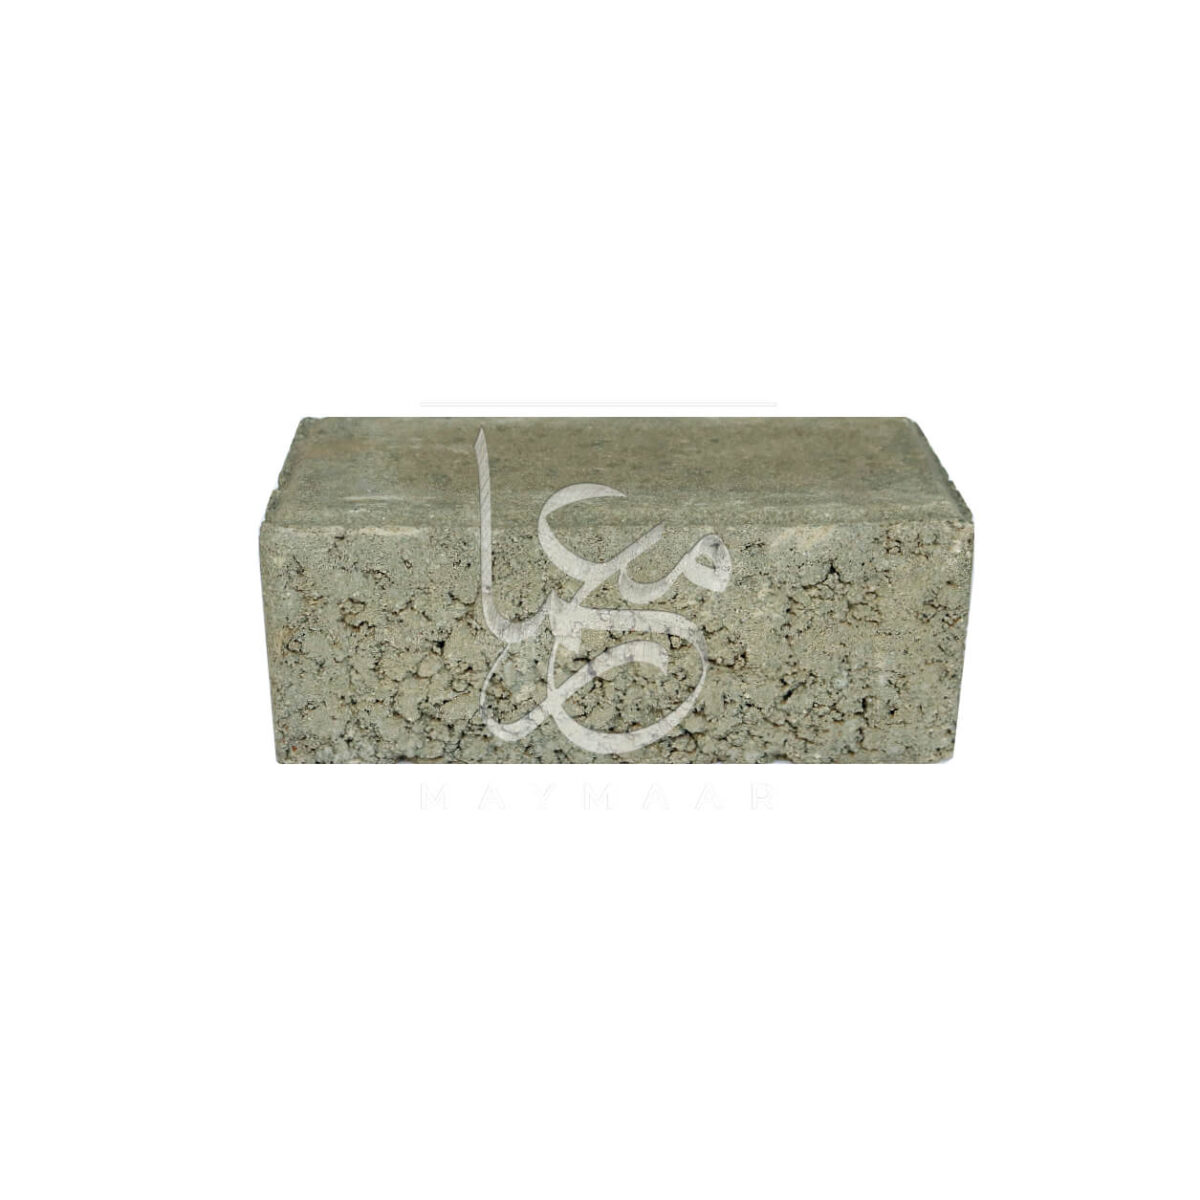 Concrete Paver Blocks